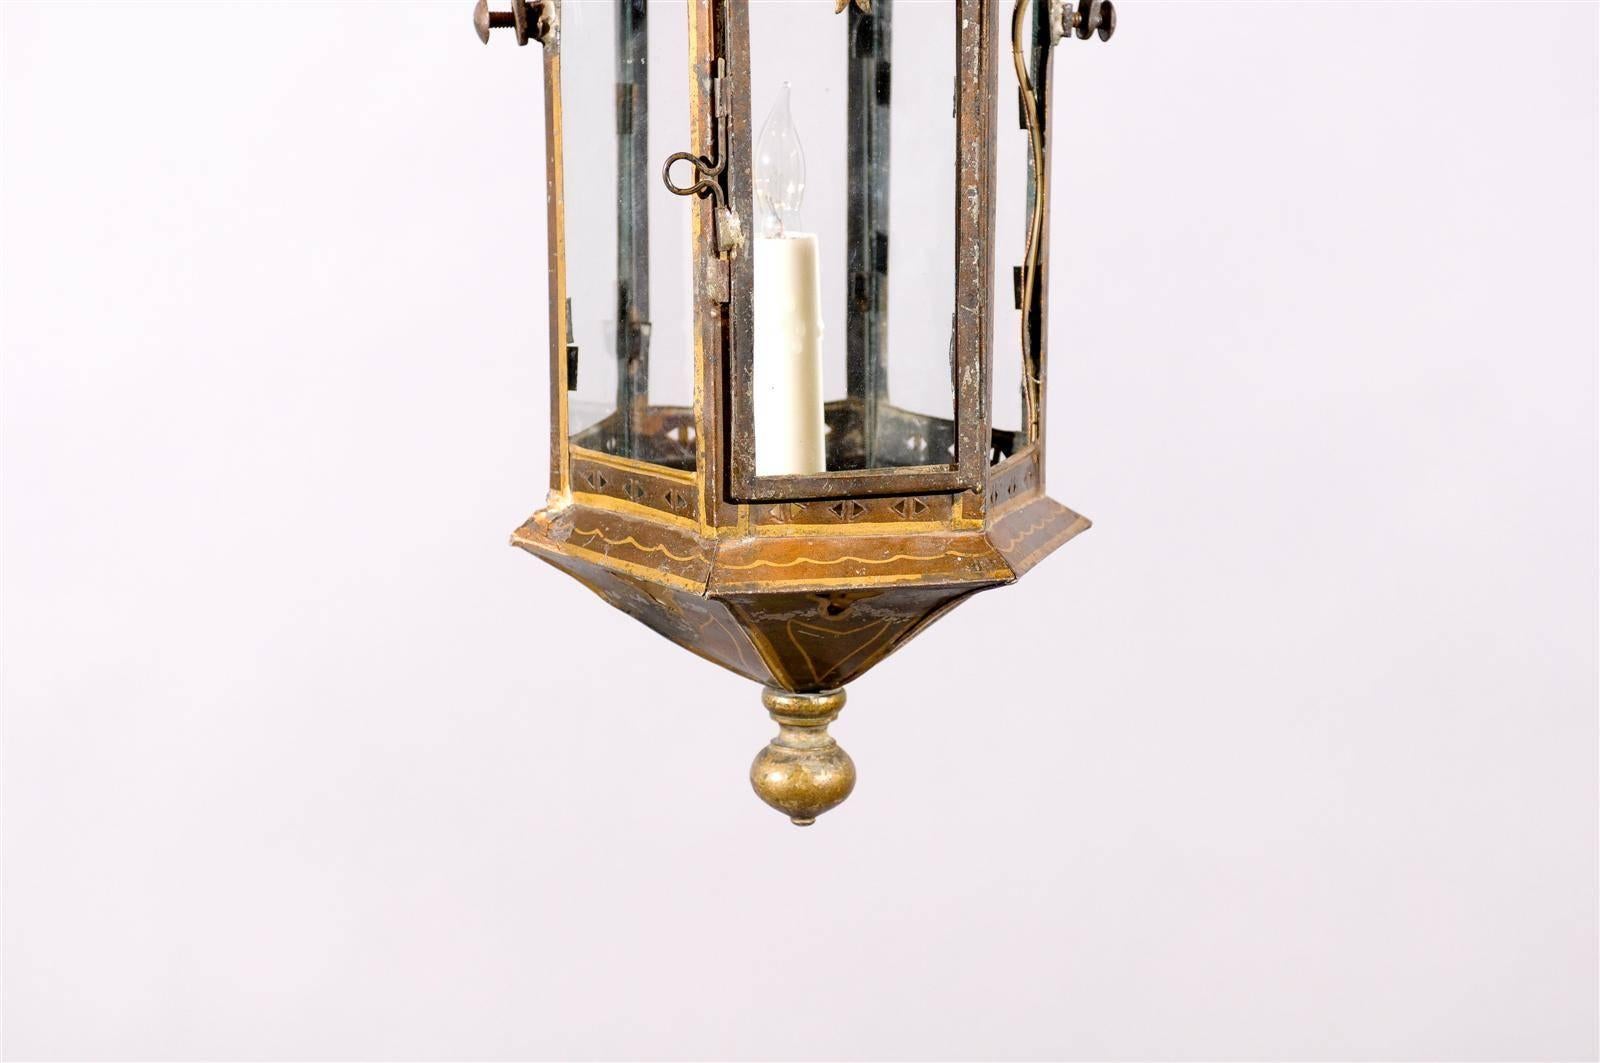 Metal Hexagonal Painted Tole Single Light Lantern, France, 19th Century